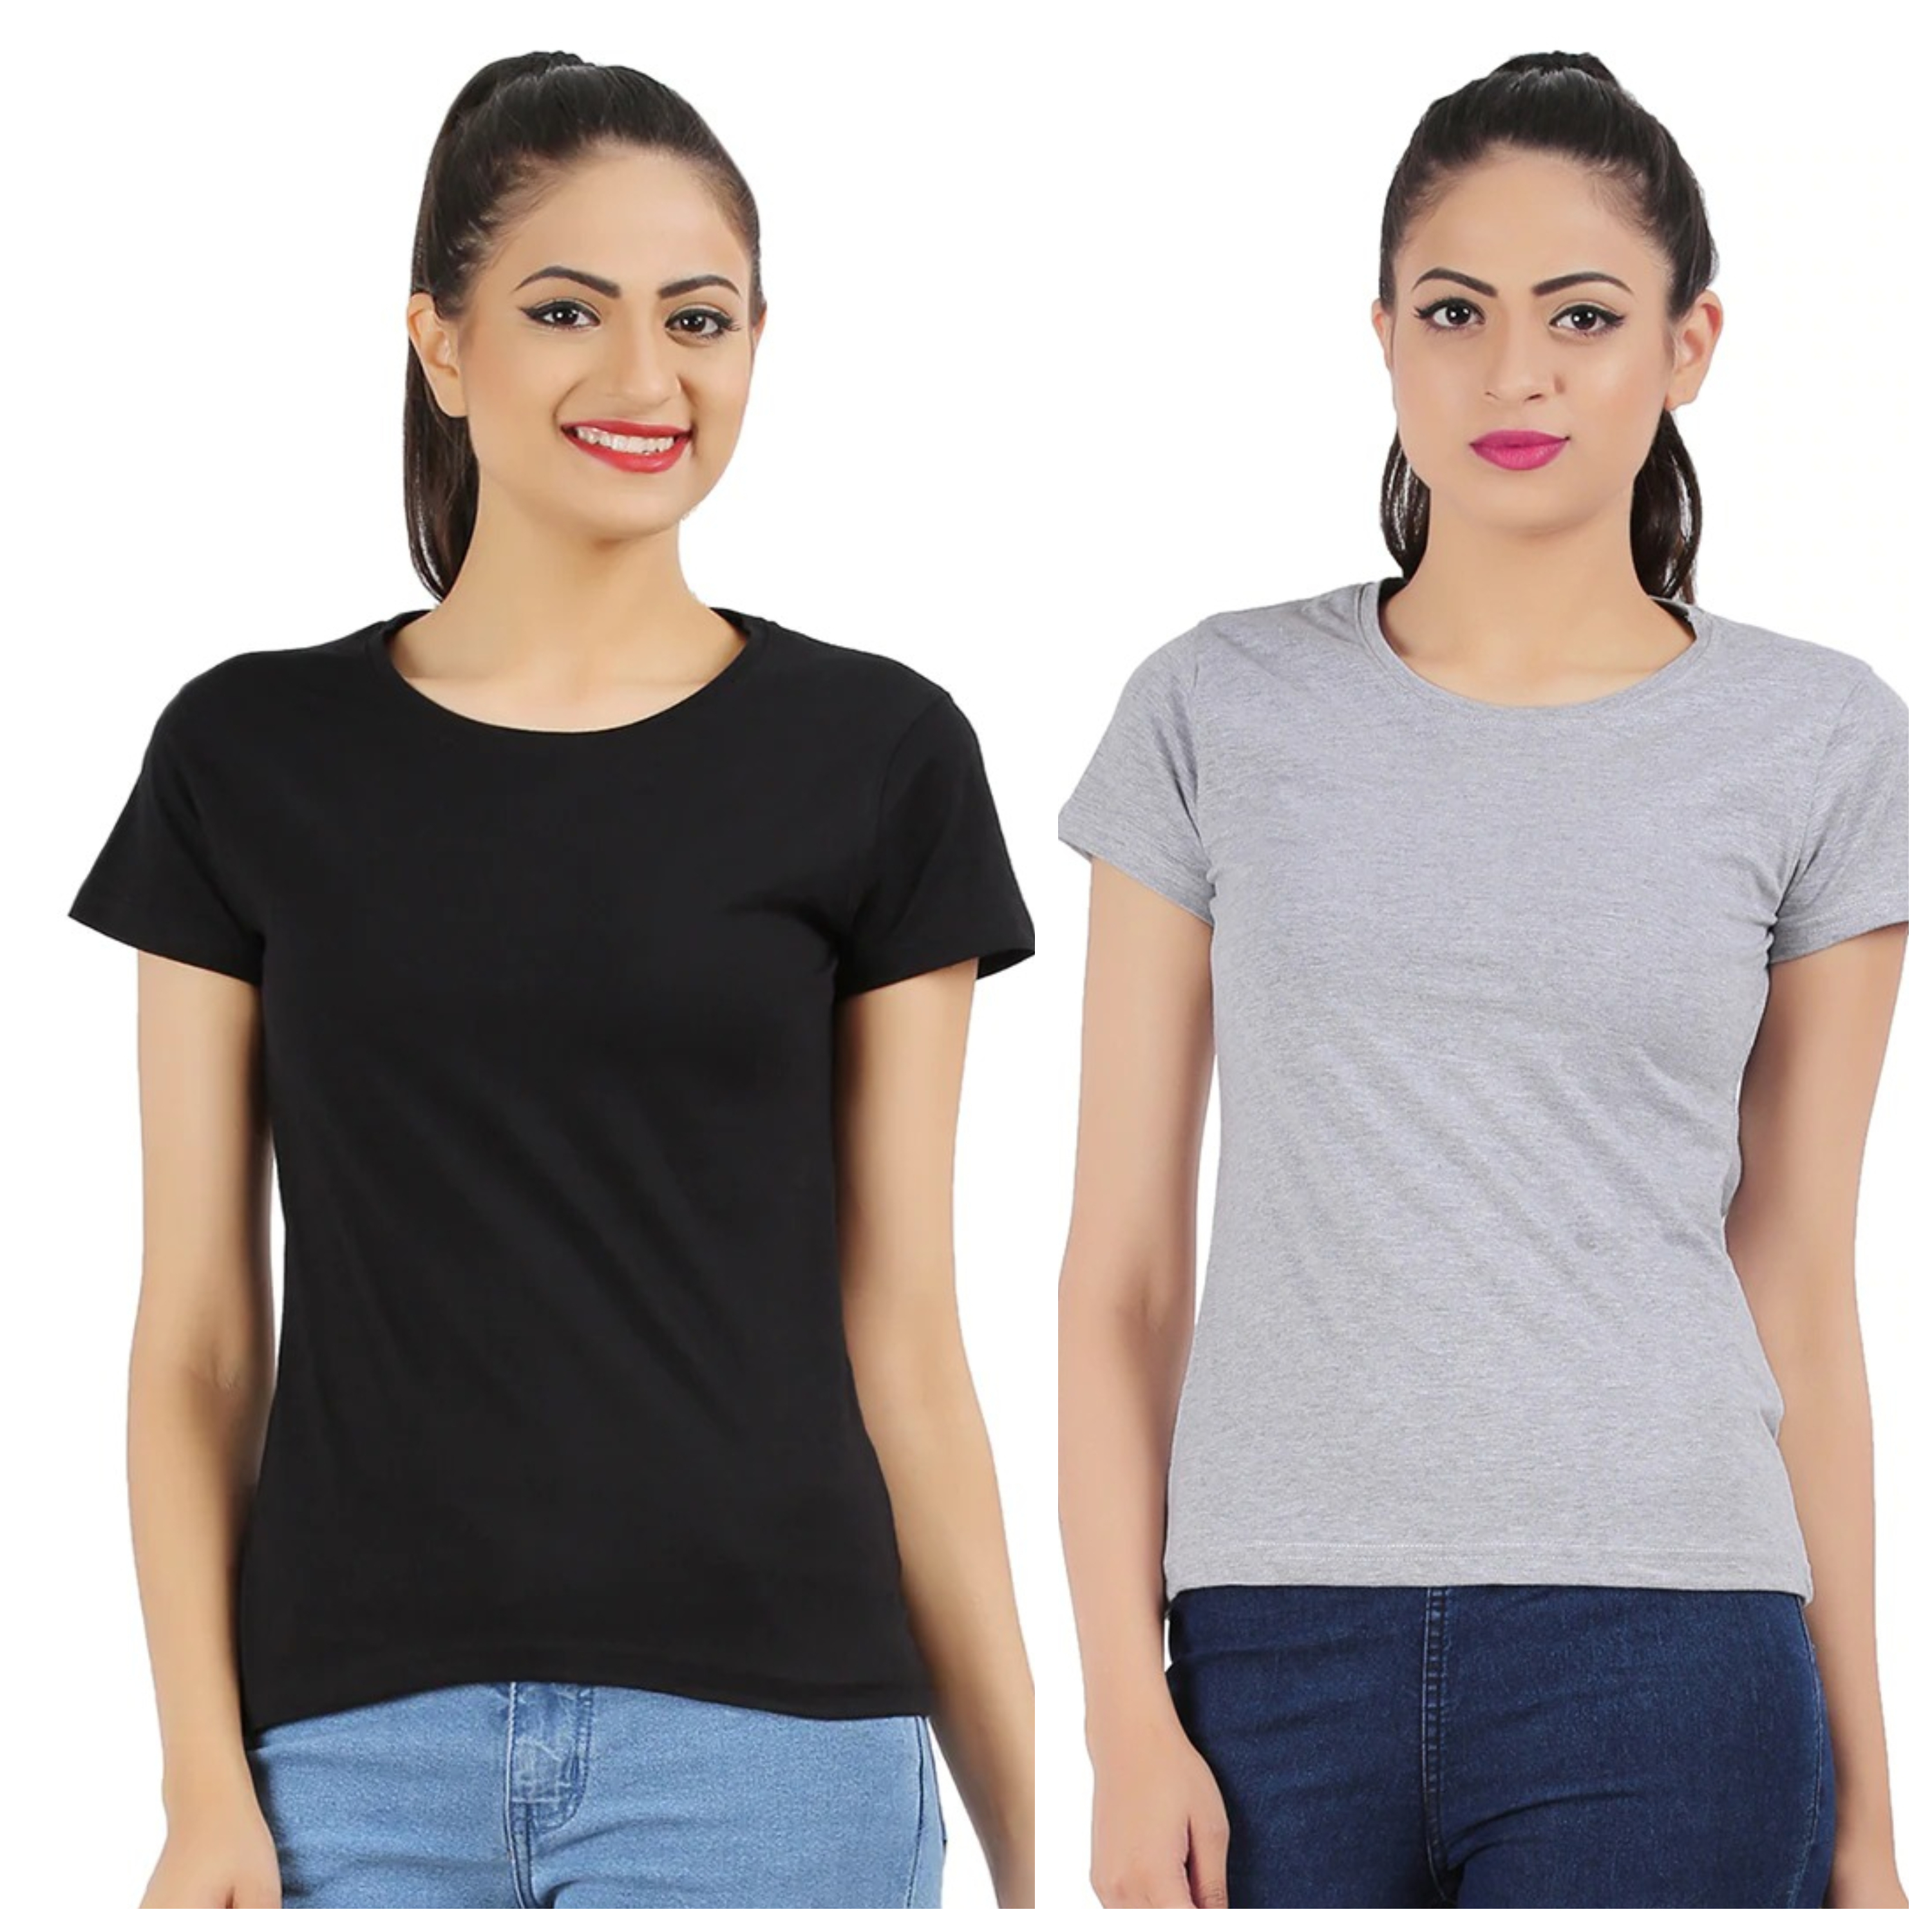 Tijuca Fashion Girls Half Sleeves Grey and Black T-Shirts Combo Pack (Multi)